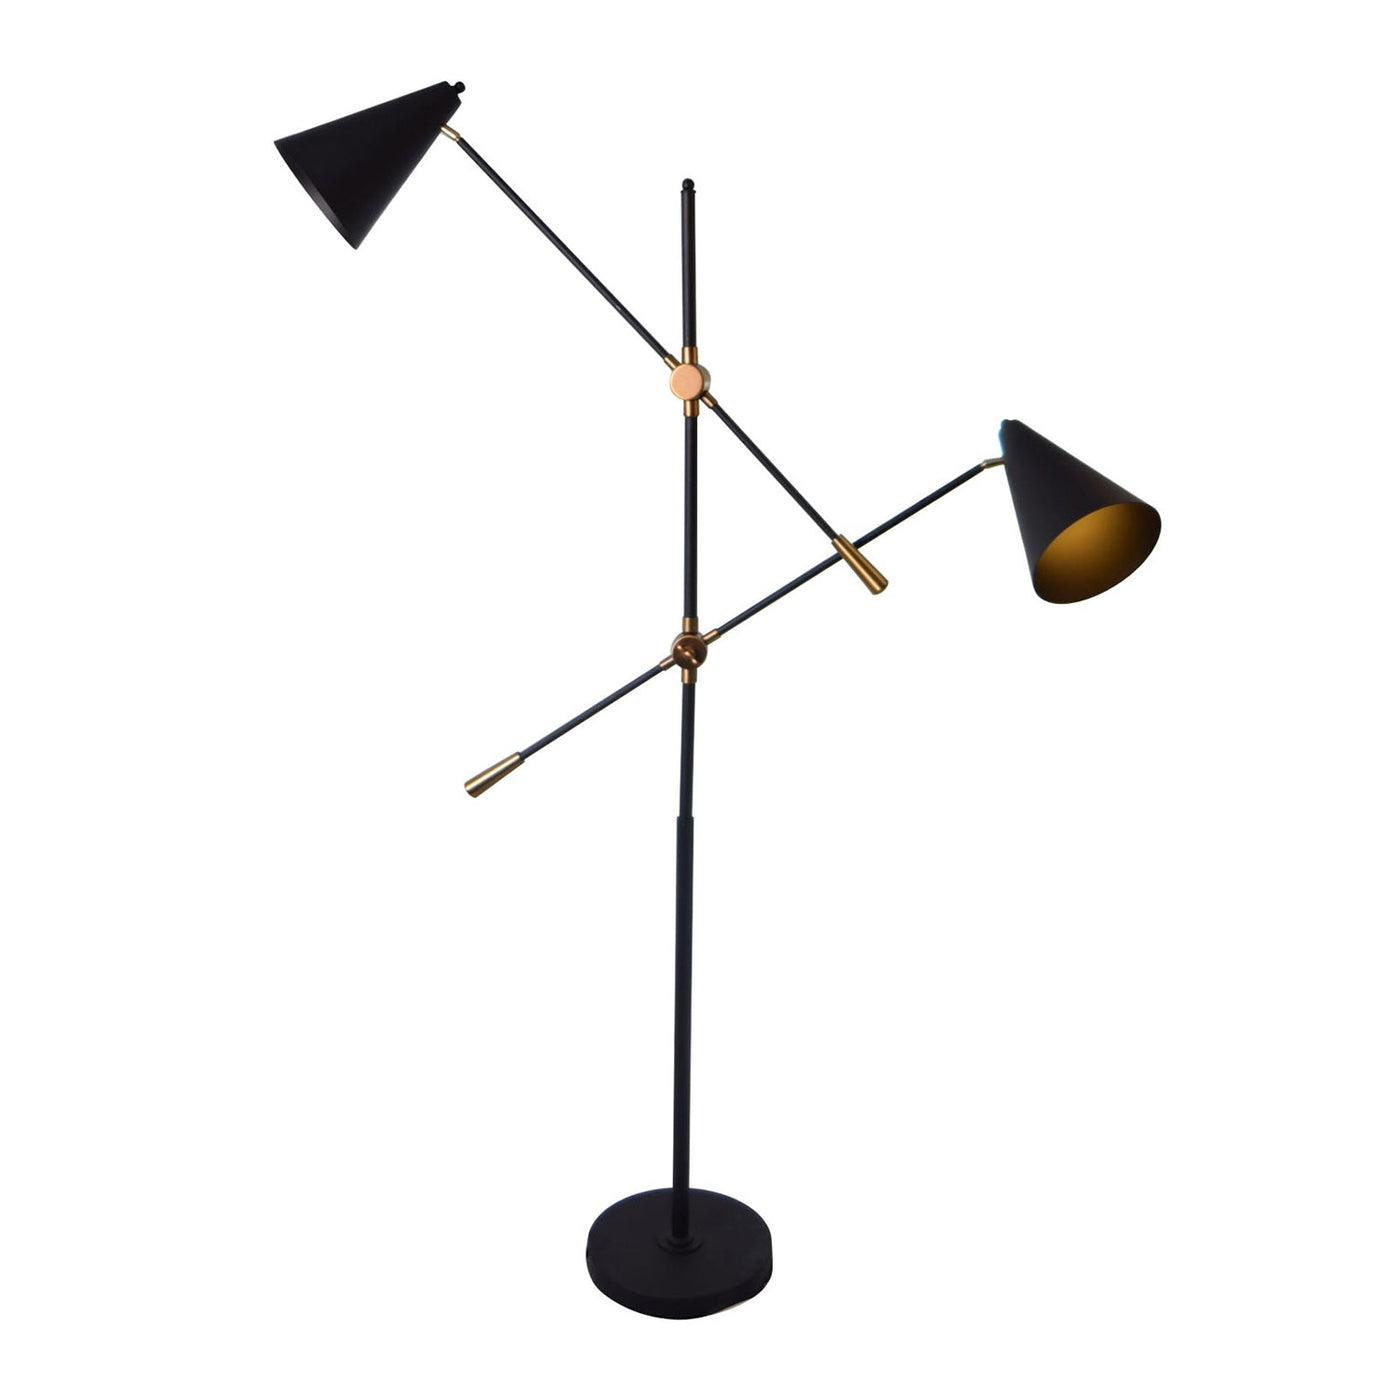 Bois et Cuir's "Hopper" 2-Bulb Floor Lamp